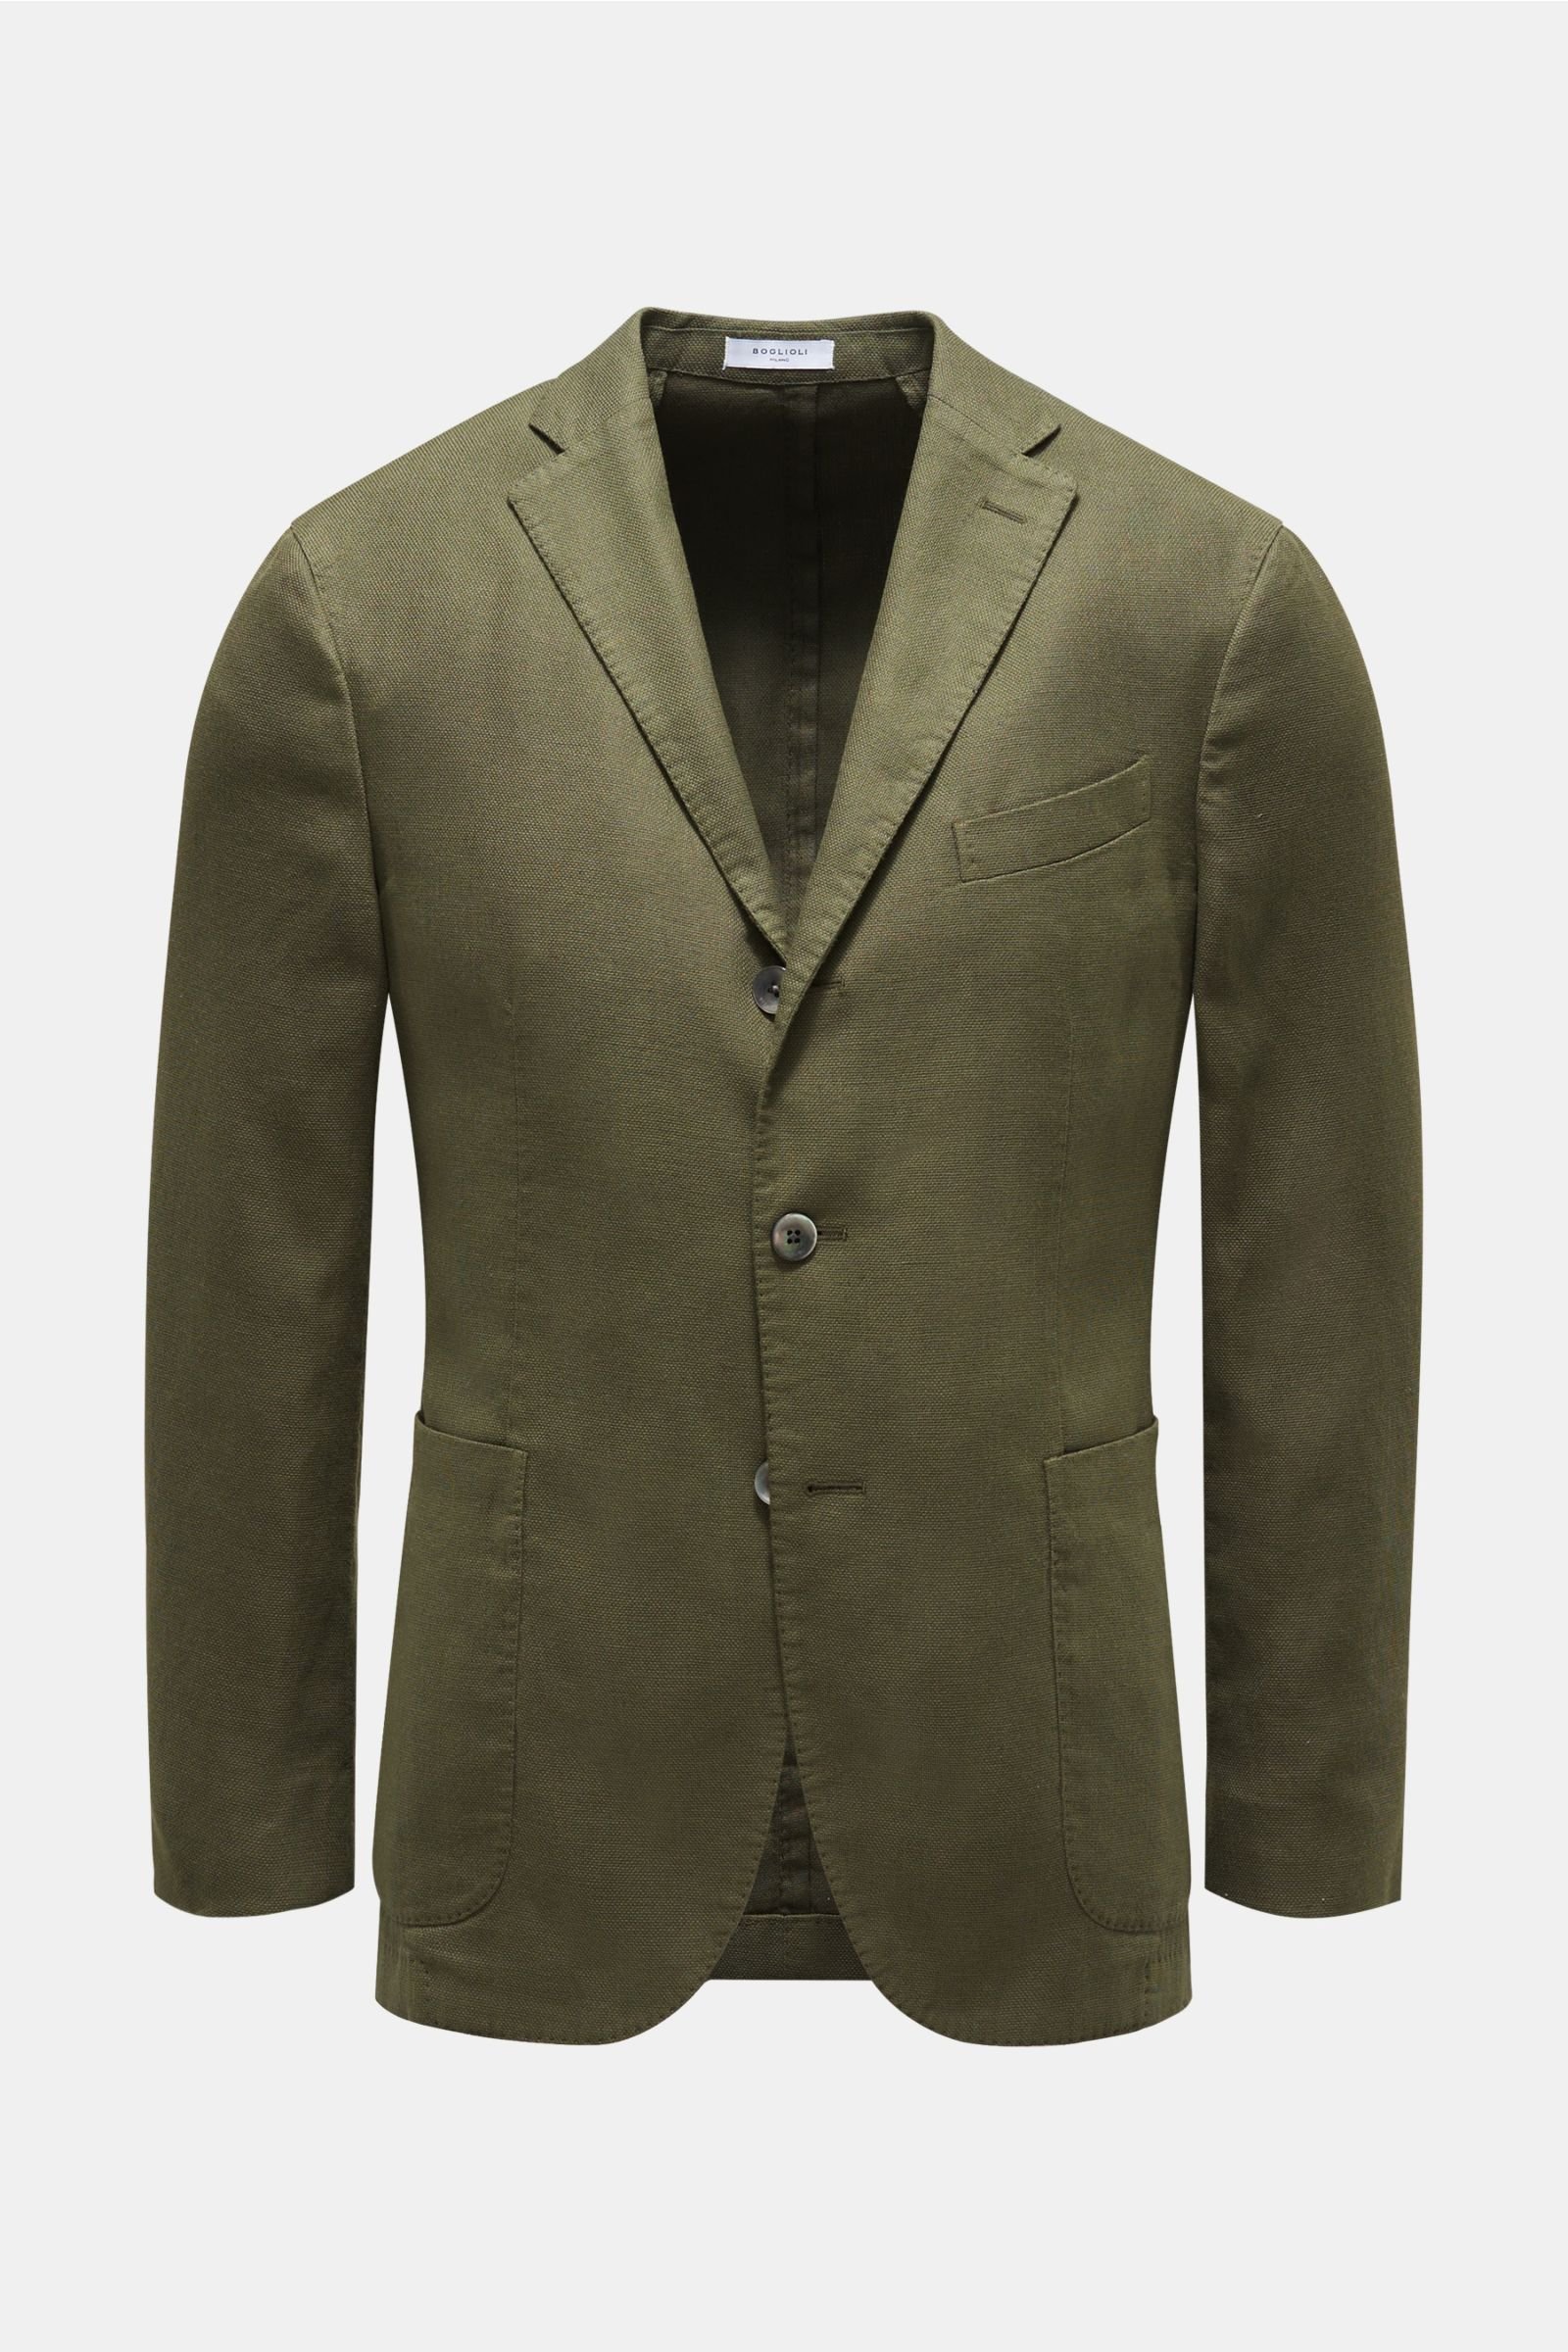 Smart-casual jacket olive